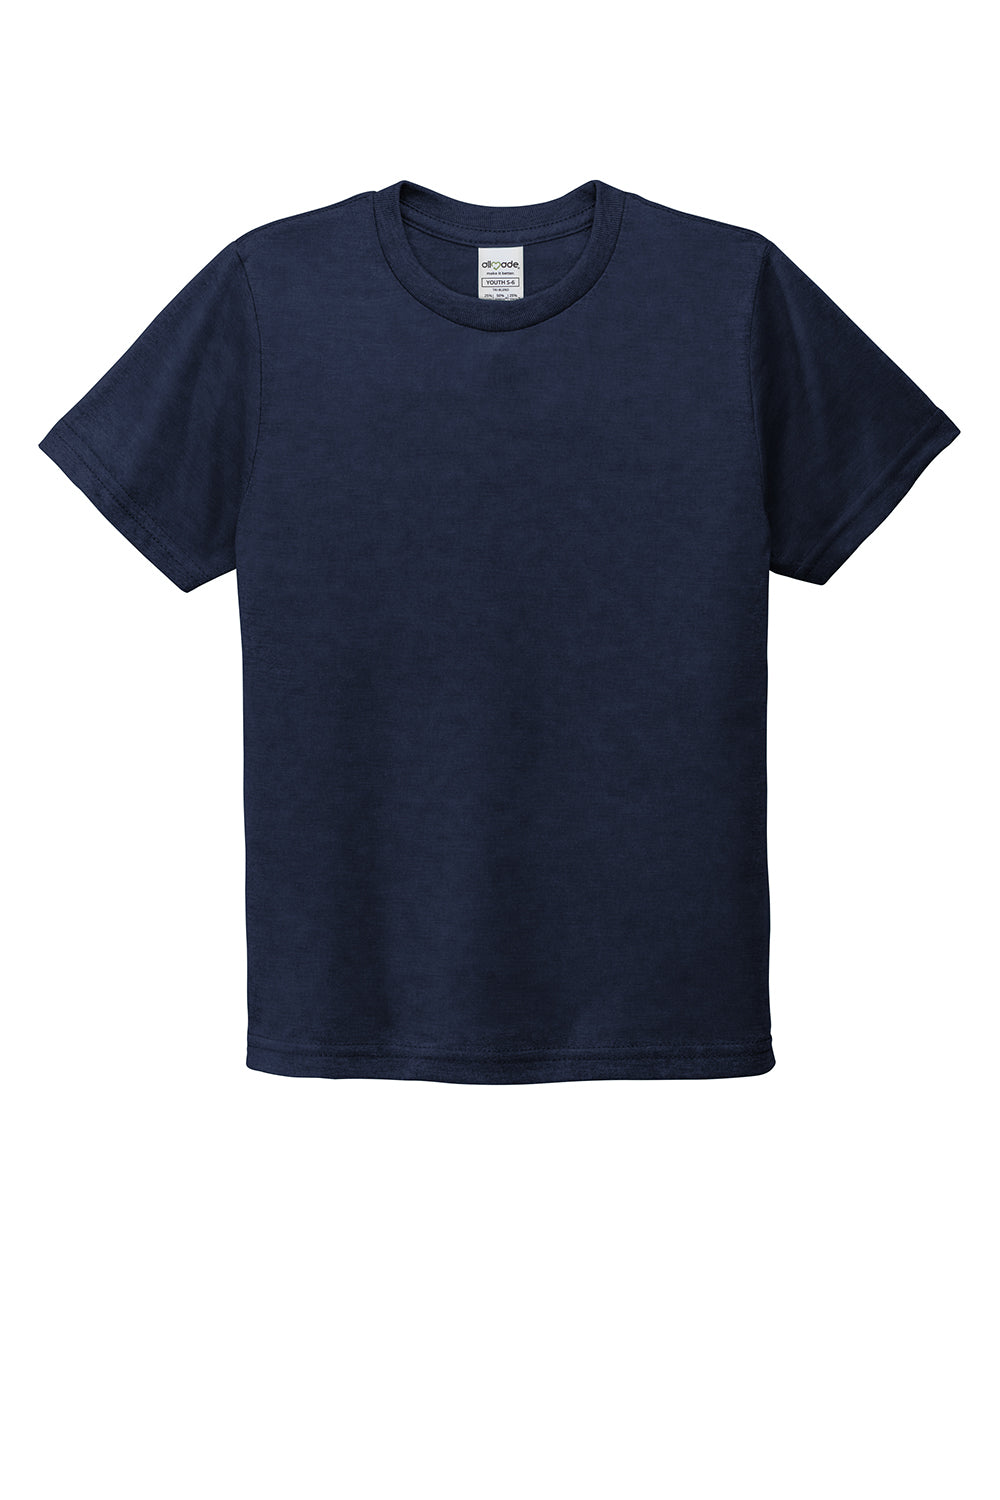 Allmade AL207 Youth Short Sleeve Crewneck T-Shirt Night Sky Navy Blue Flat Front